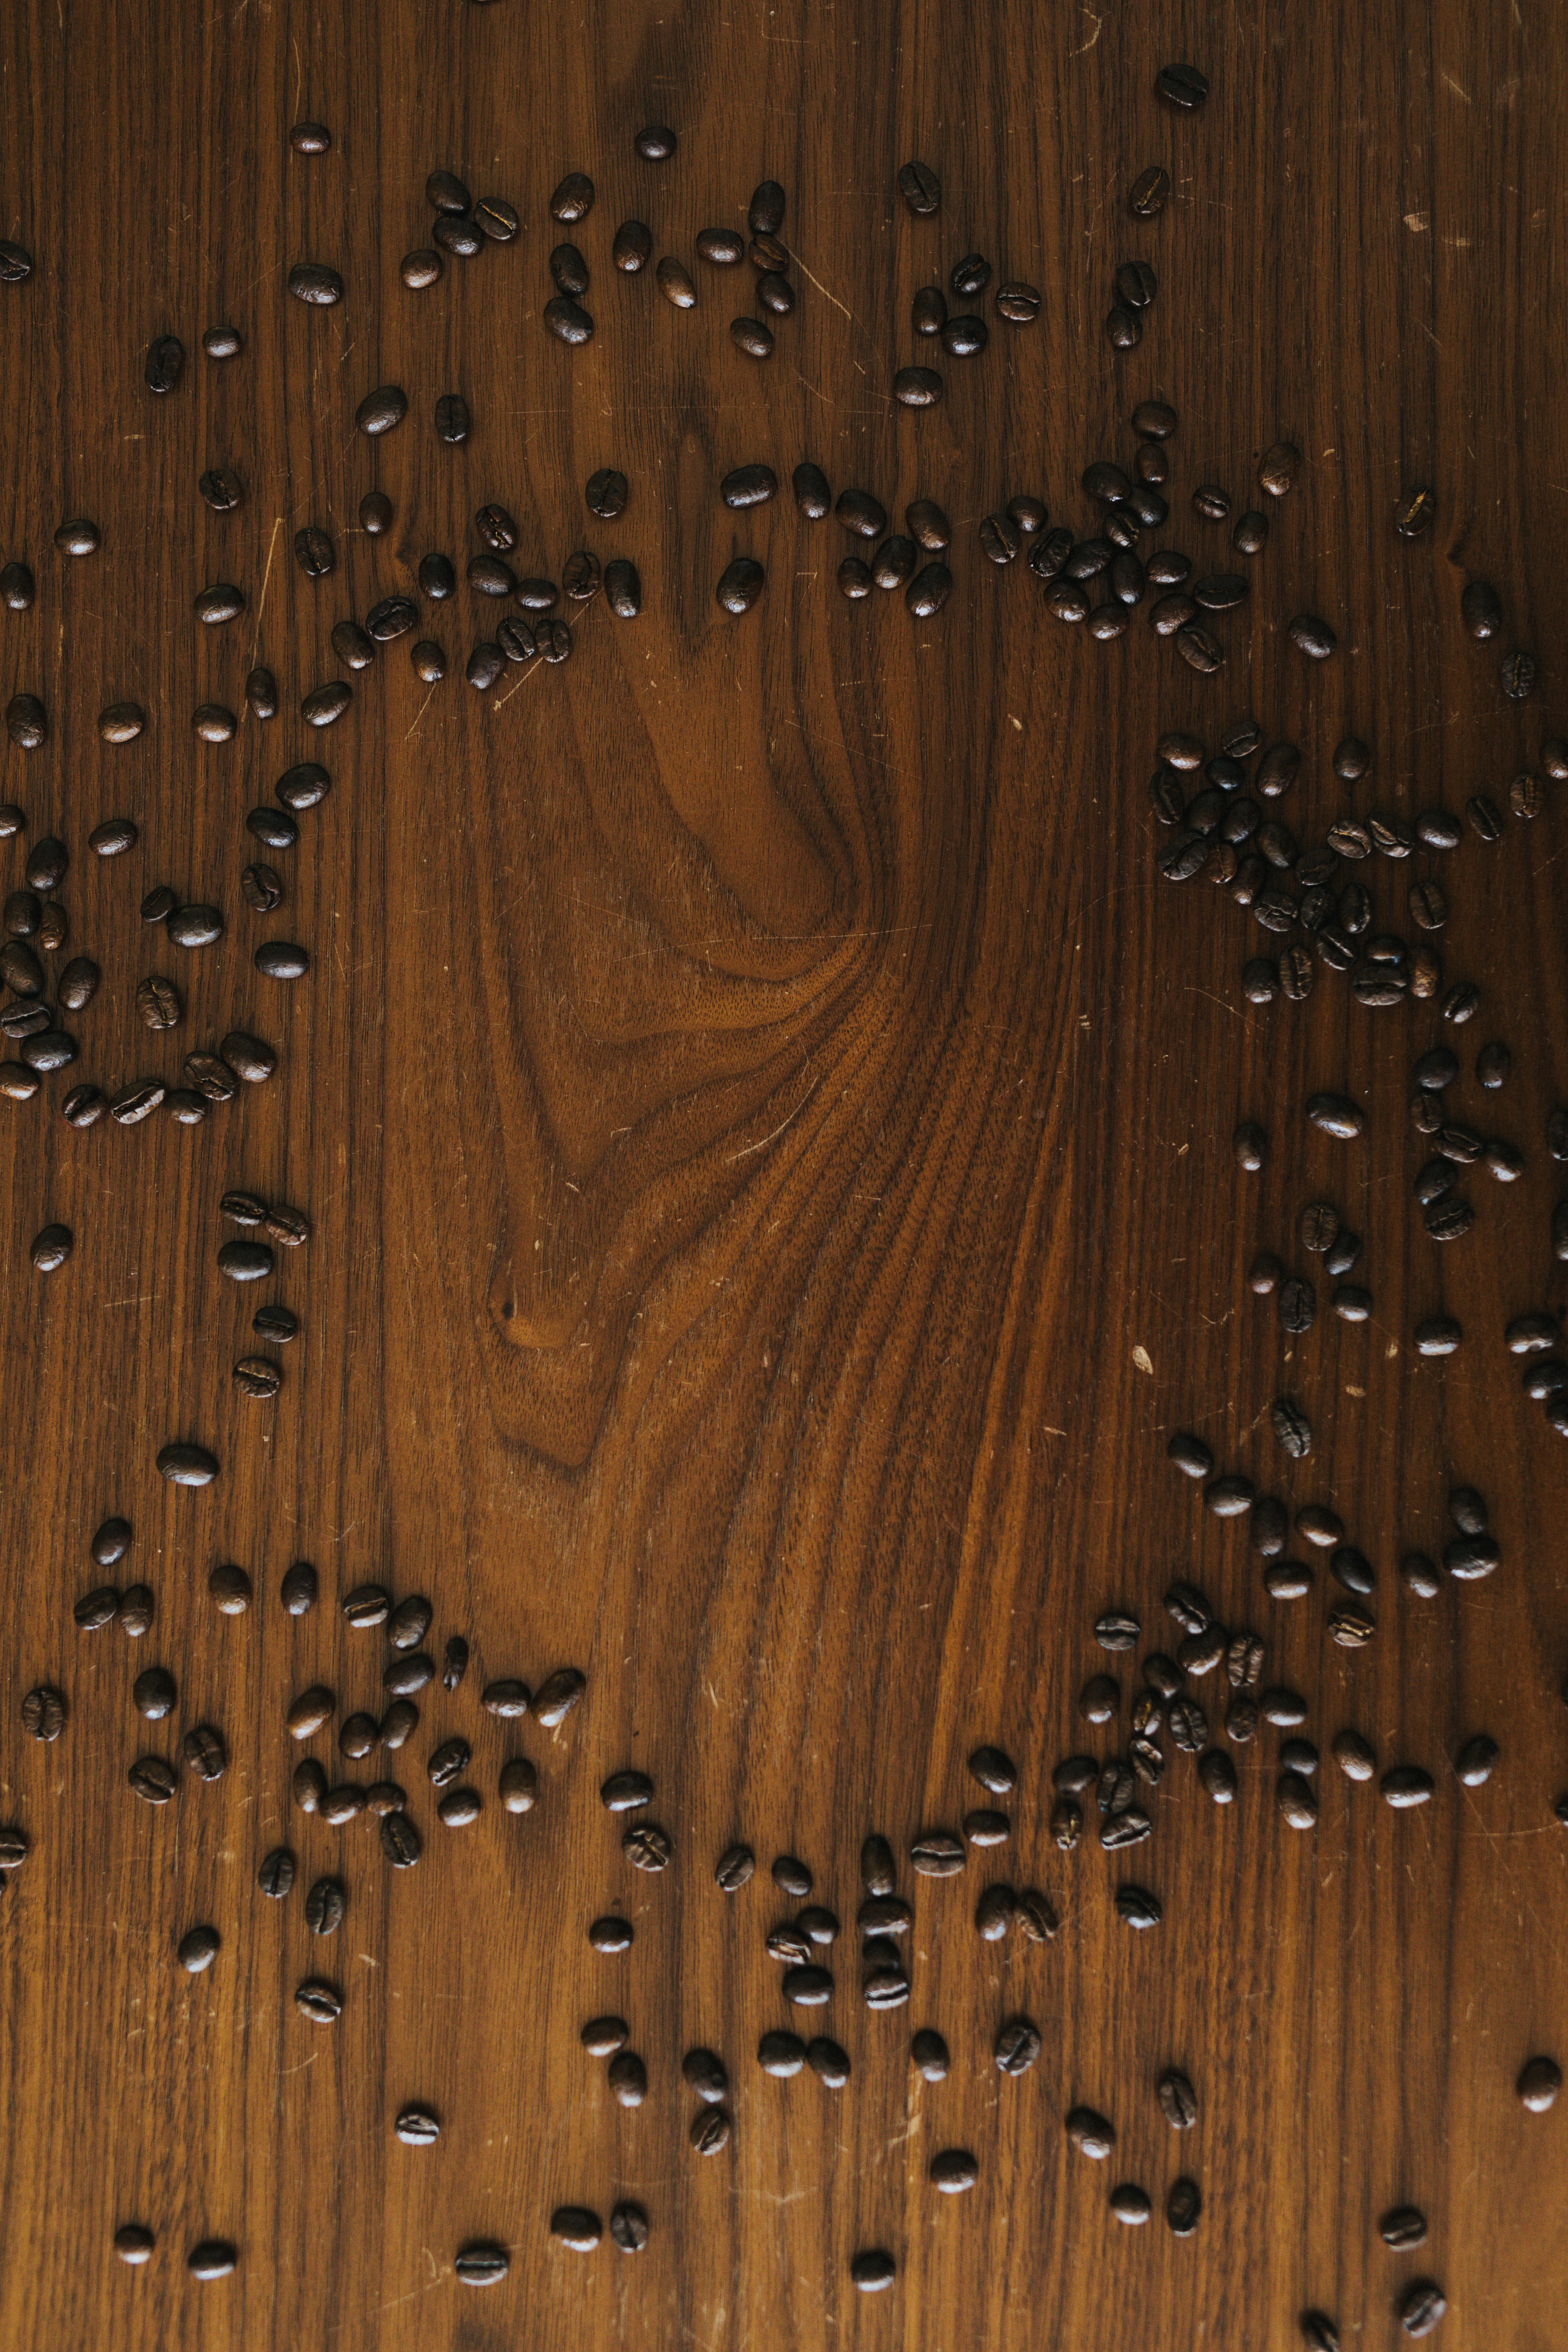 food, coffee, wood, wooden, surface, grains, coffee beans, grain iphone wallpaper